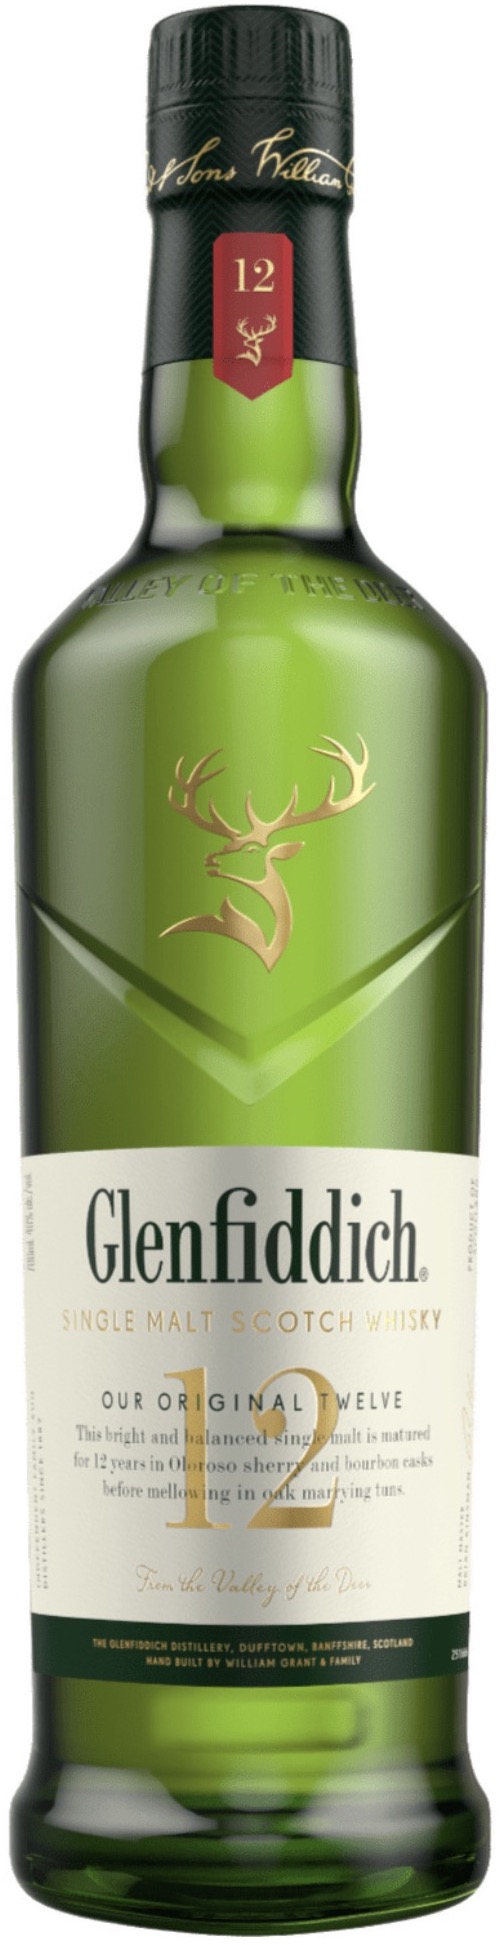 Glenfiddich Single Malt Scotch Whisky 12 Years Old GP 40% 0,7L